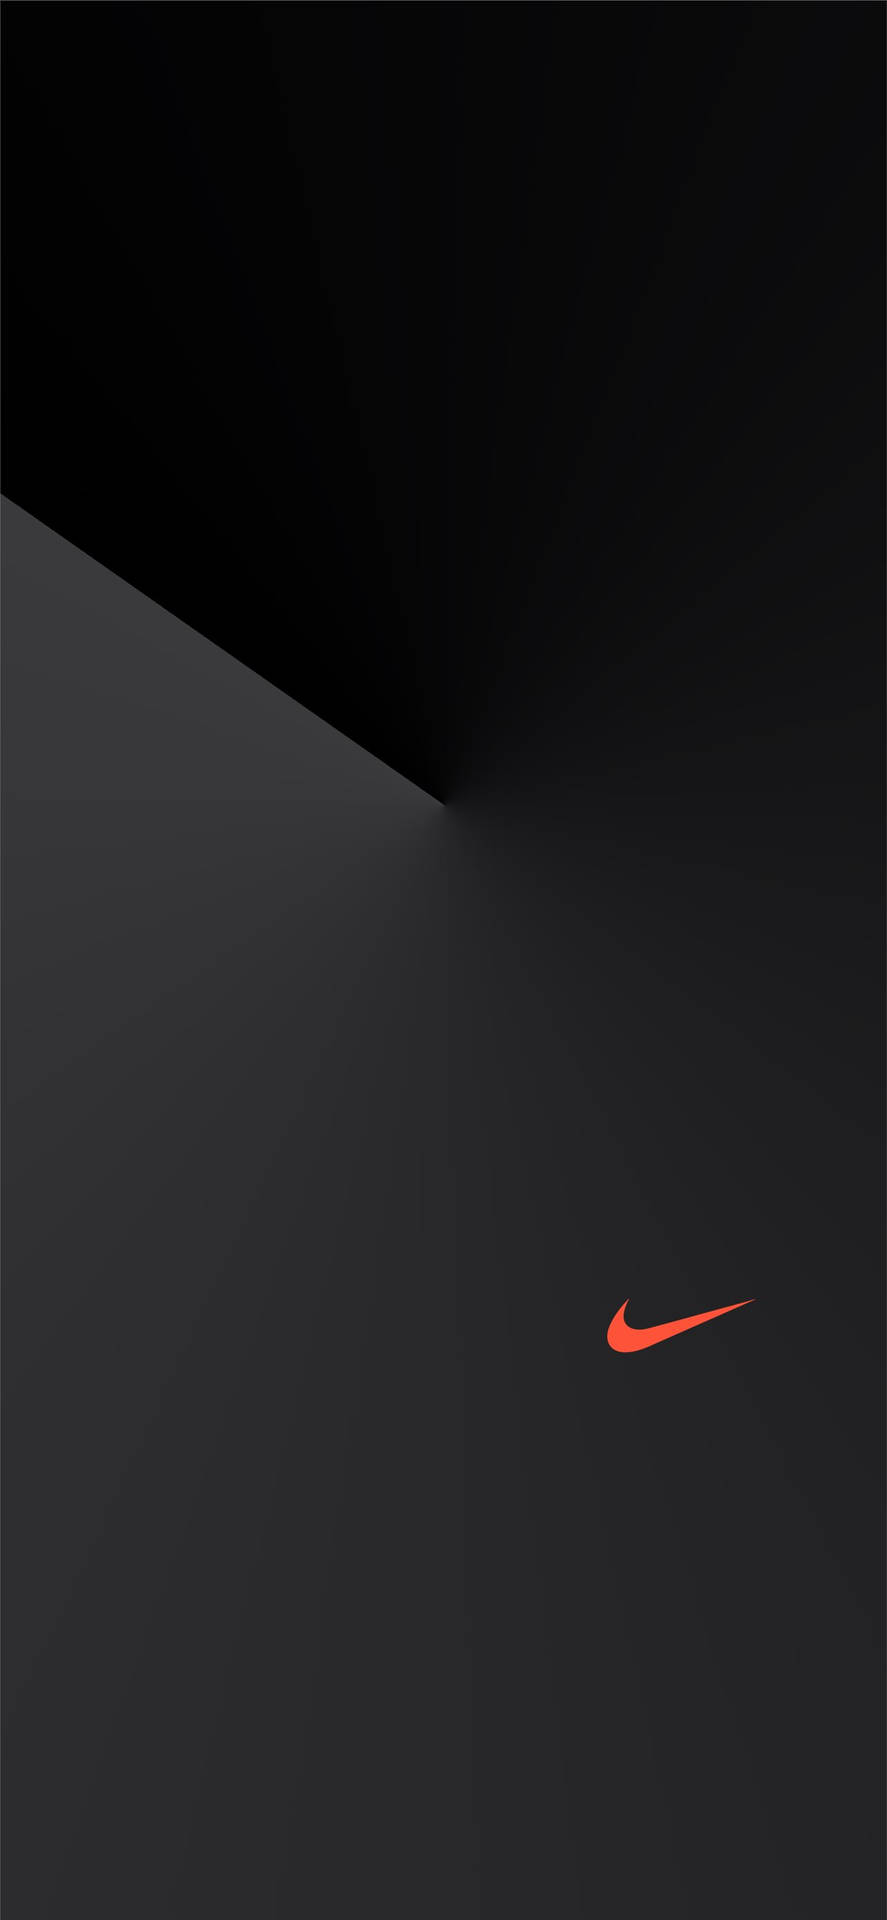 Small Nike Iphone Logo Wallpaper